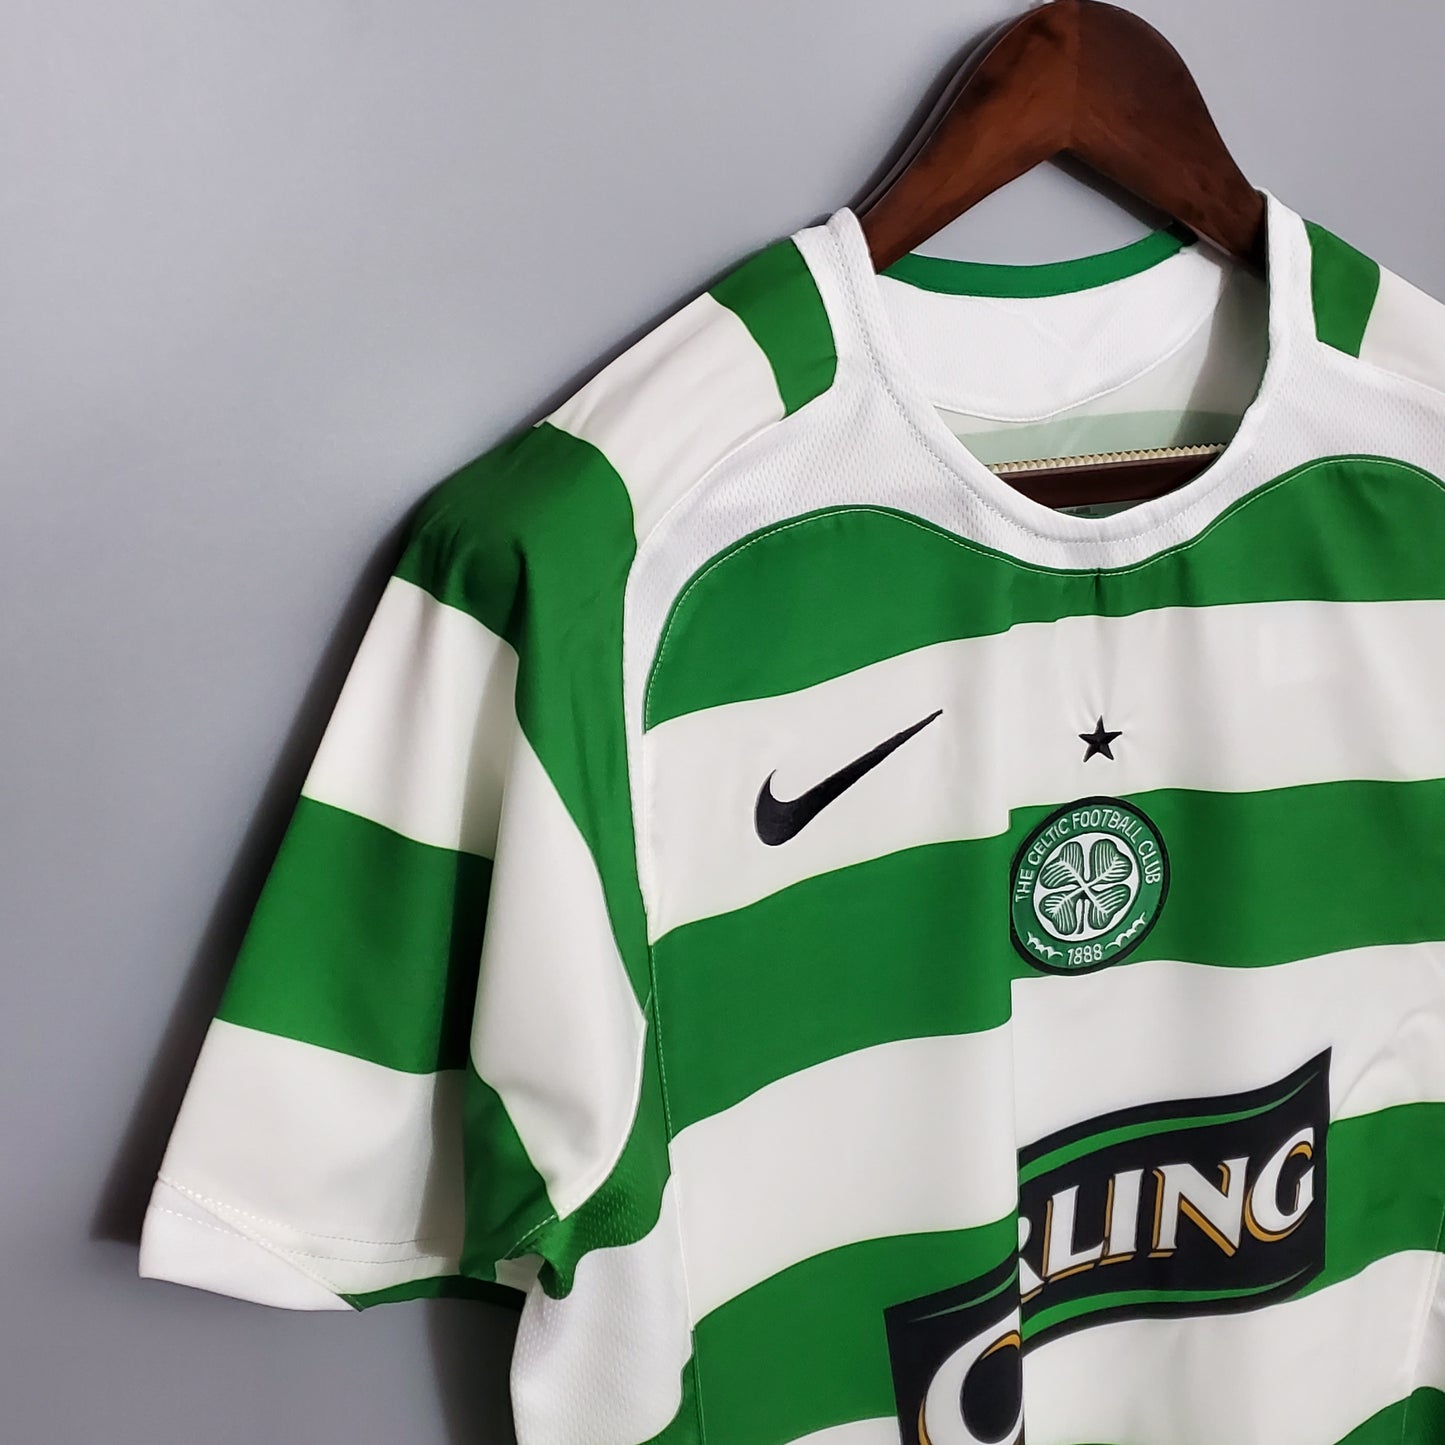 Celtic 05-07 Home Shirt